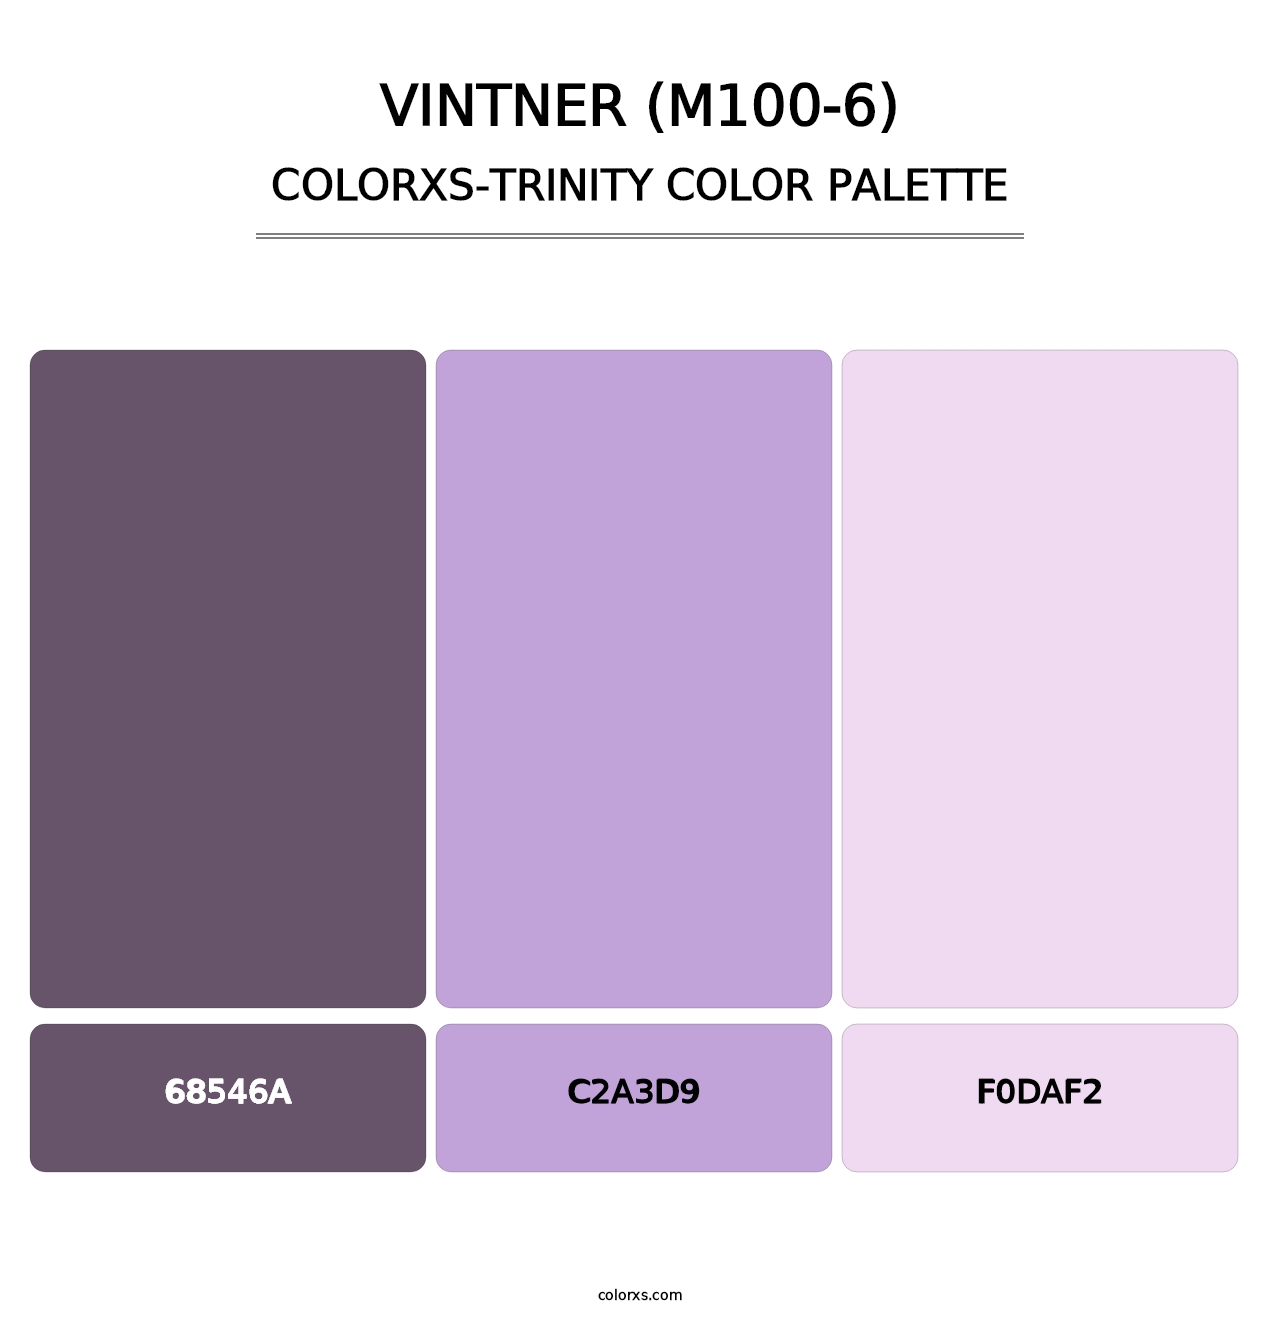 Vintner (M100-6) - Colorxs Trinity Palette